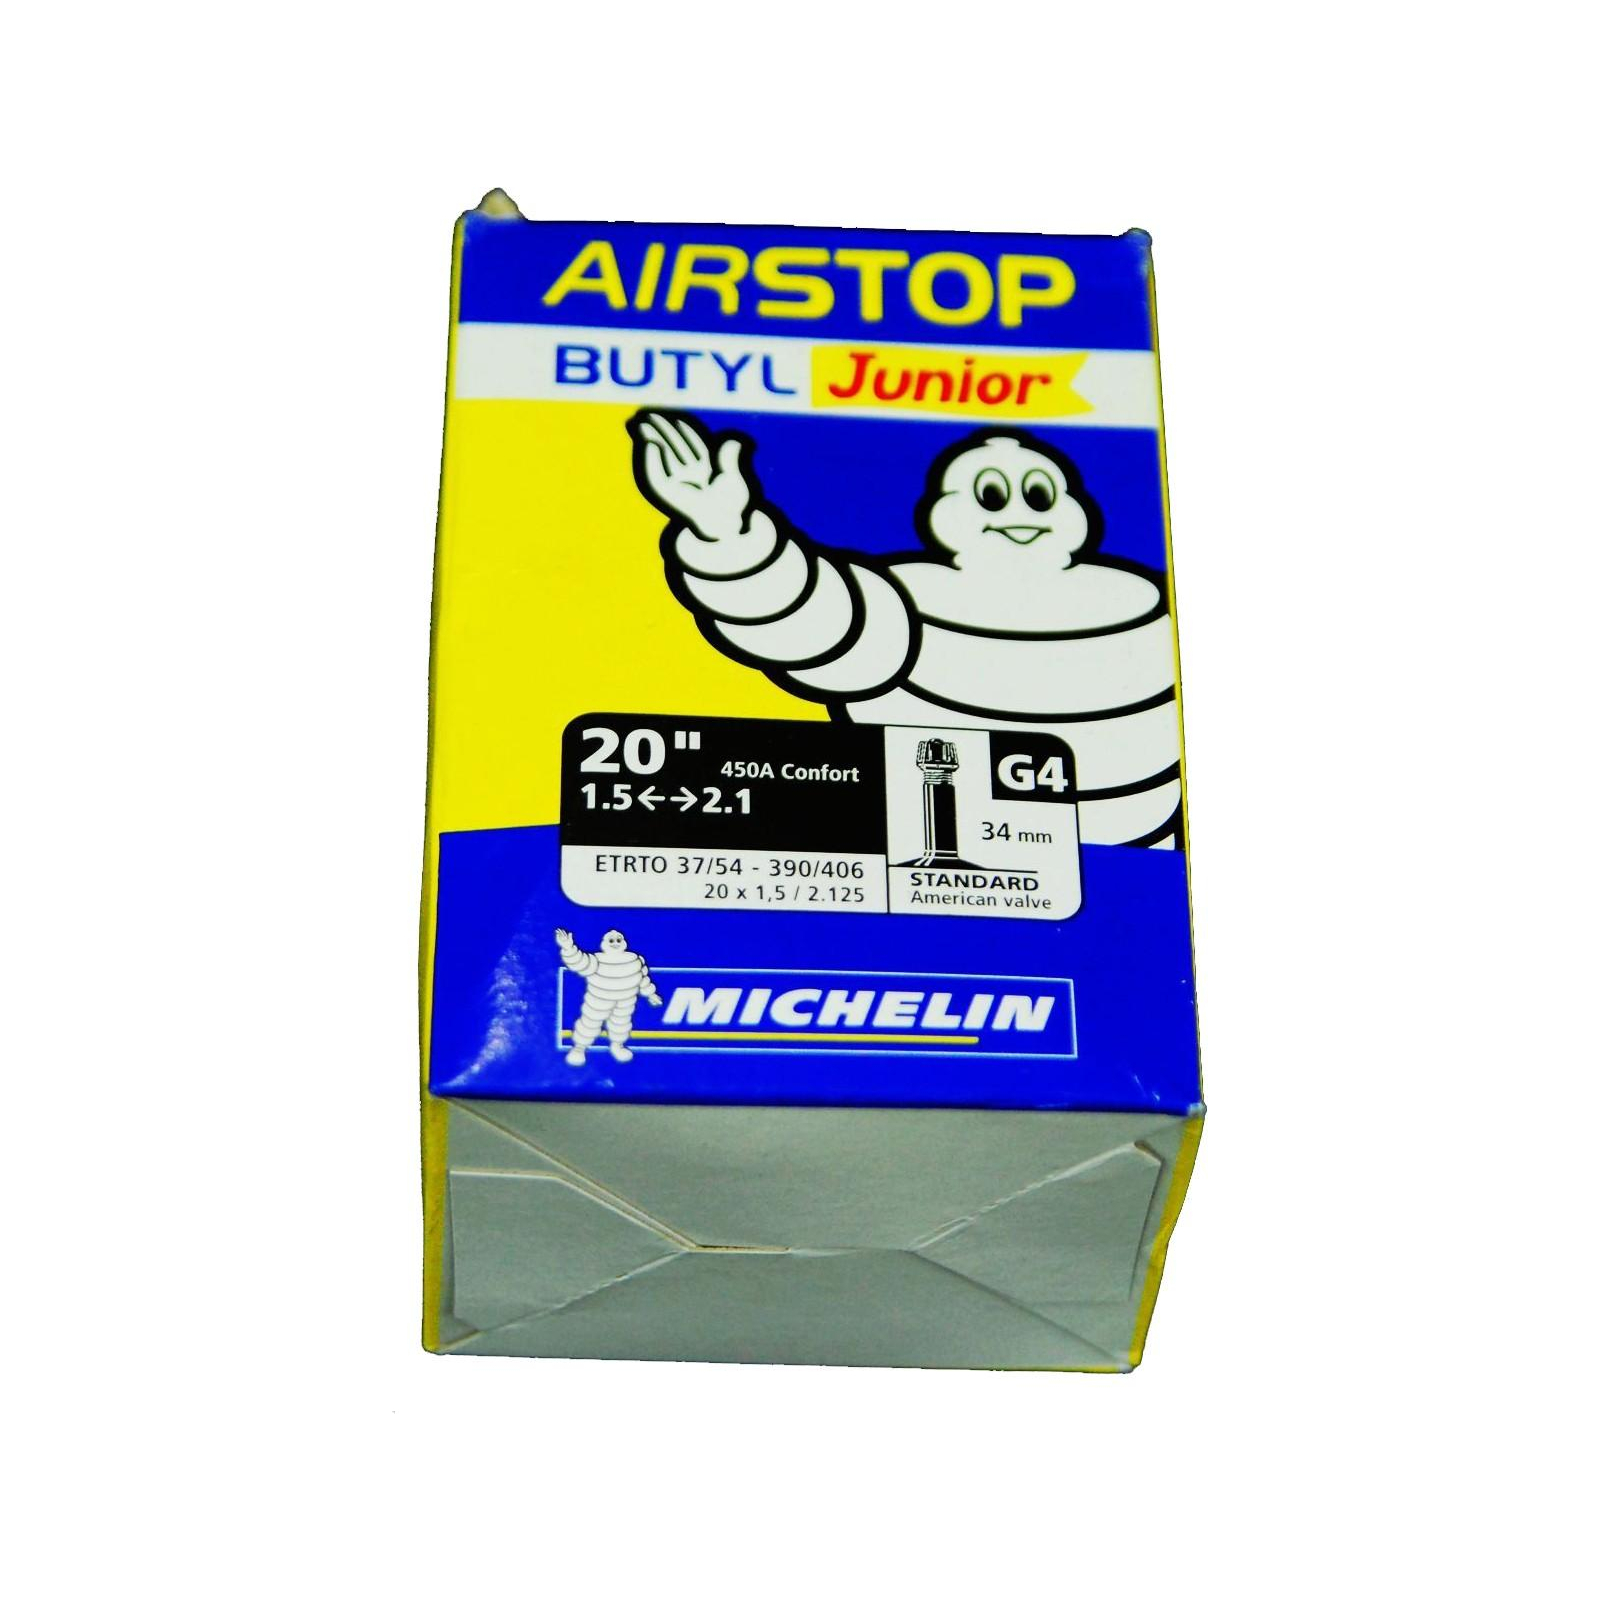 Велосипедная камера Michelin G4 AIRSTOP, MTB 20" (37/54X390/406) ST (819653)